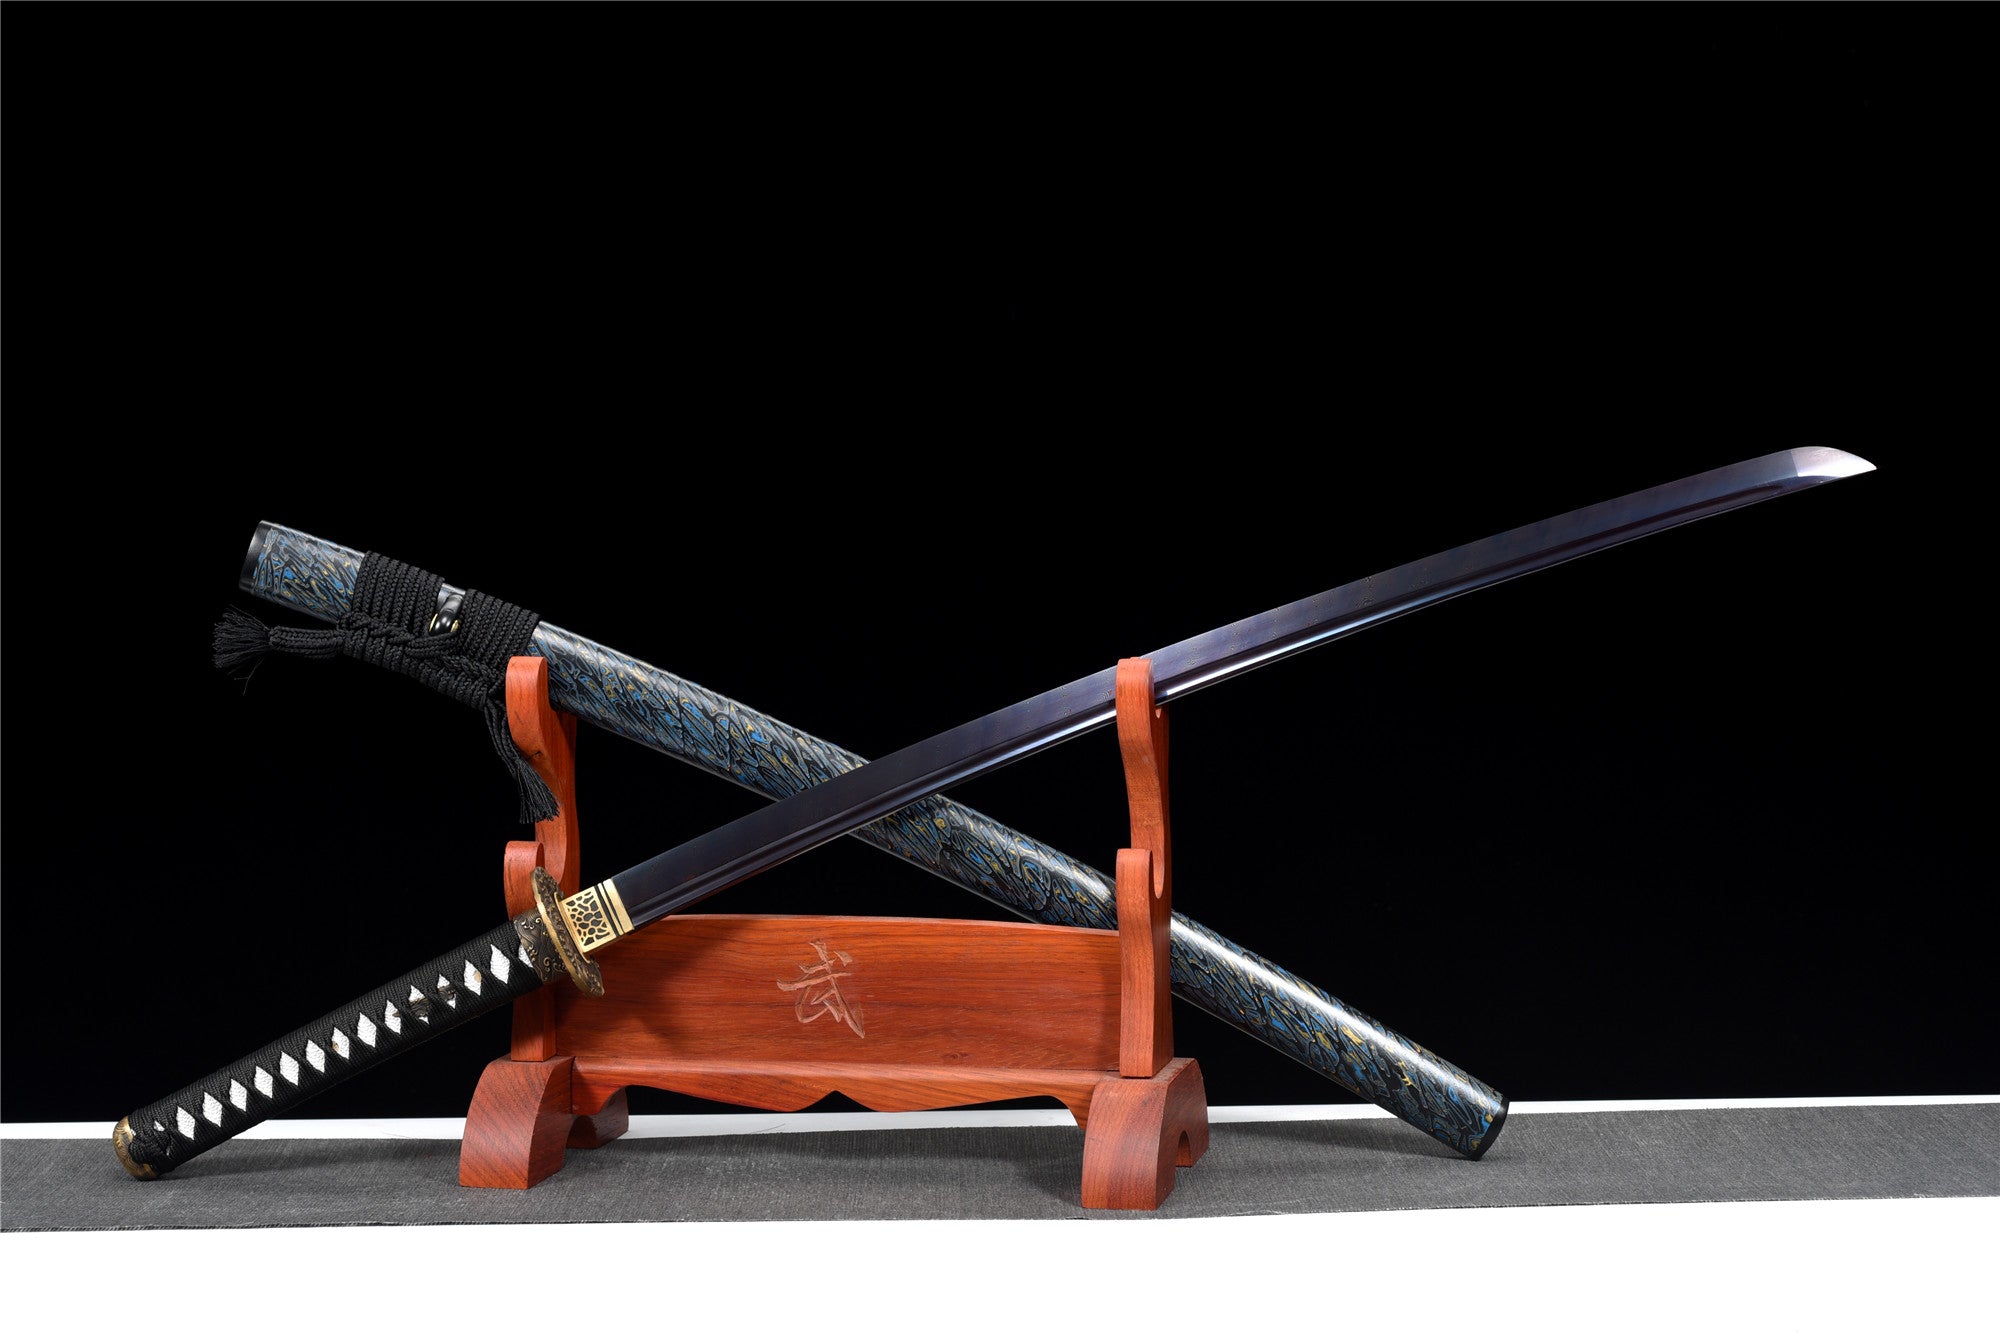 Blue Devils Katana,Japanese Samurai Sword,Real Handmade Katana,Roasted blue pattern blade,Damascus steel